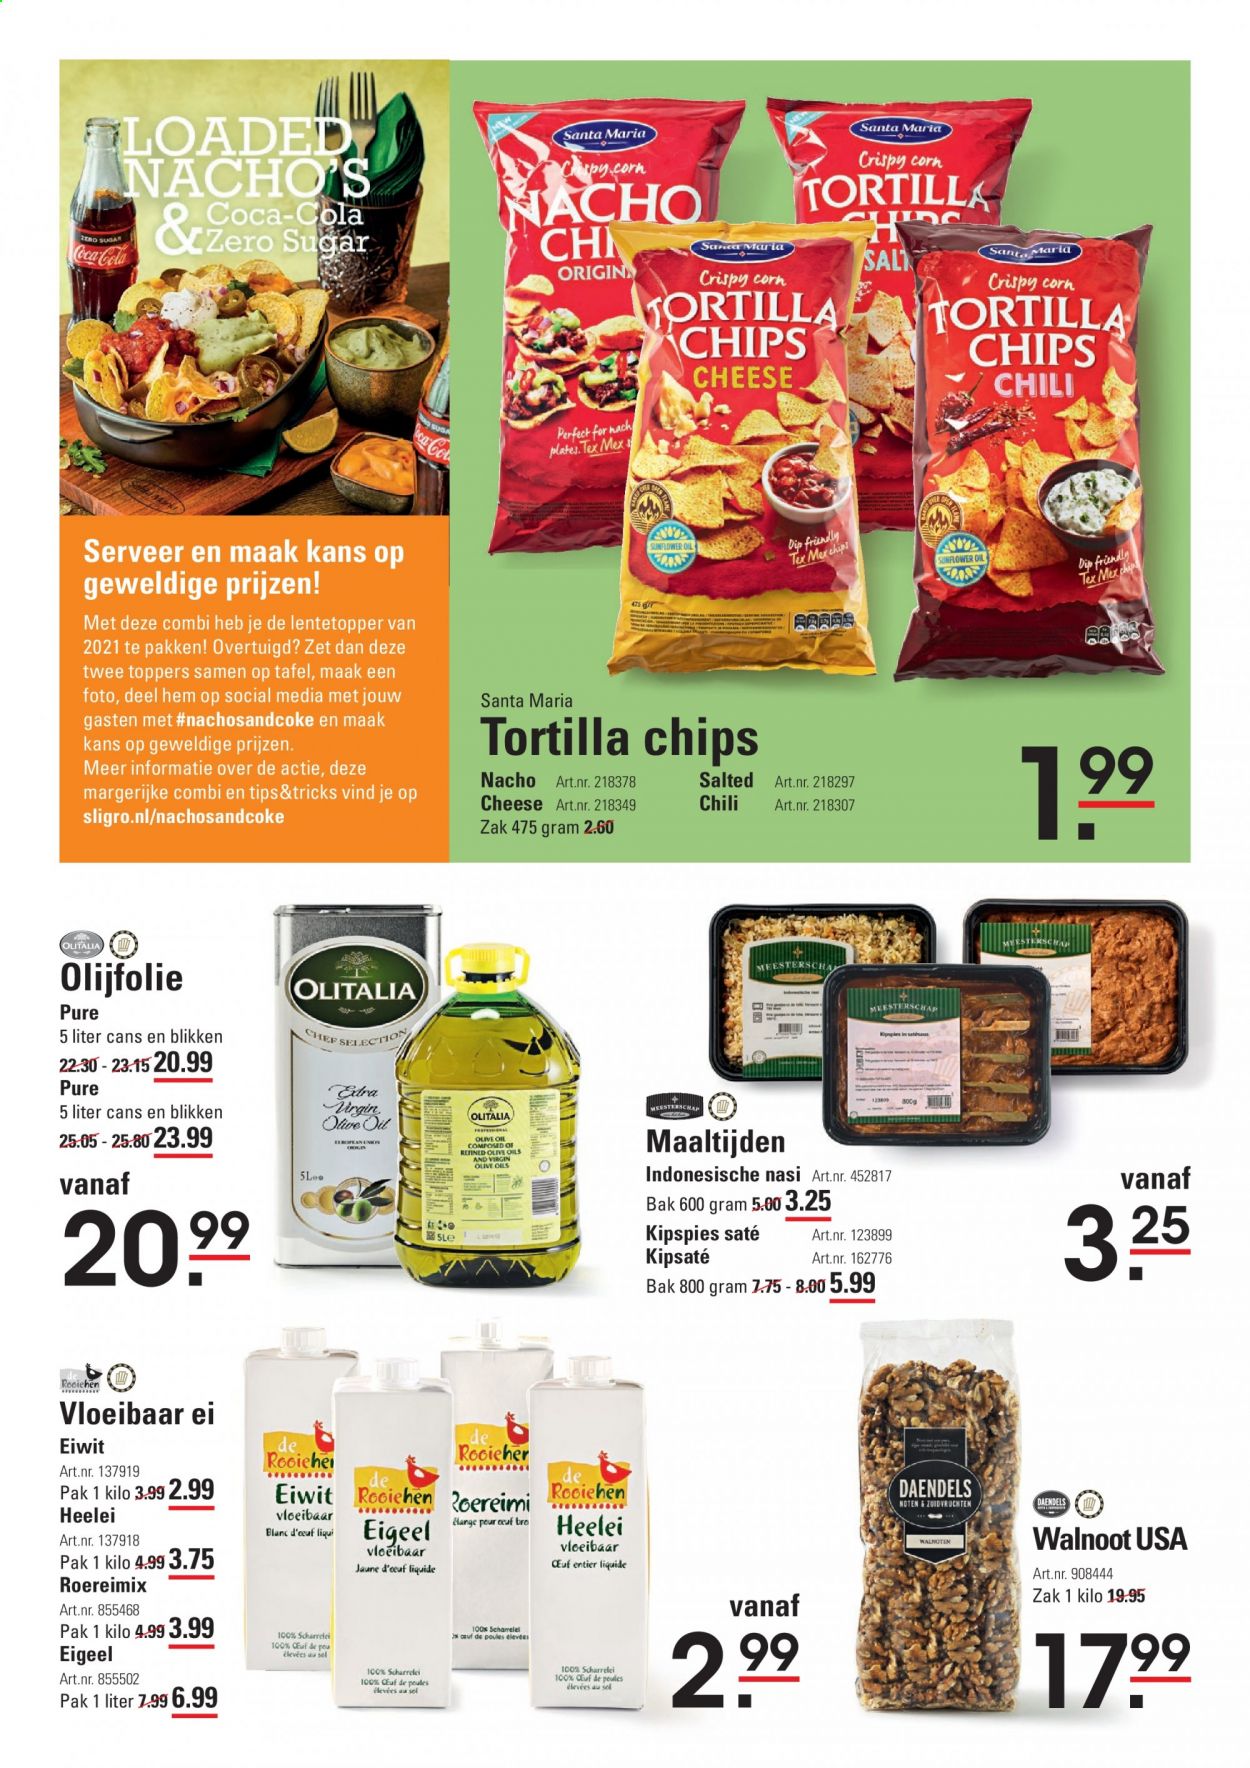 thumbnail - Sligro-aanbieding - 29-4-2021 - 17-5-2021 -  producten in de aanbieding - tortillas, ei, chips, tortilla chips, olijfolie. Pagina 8.